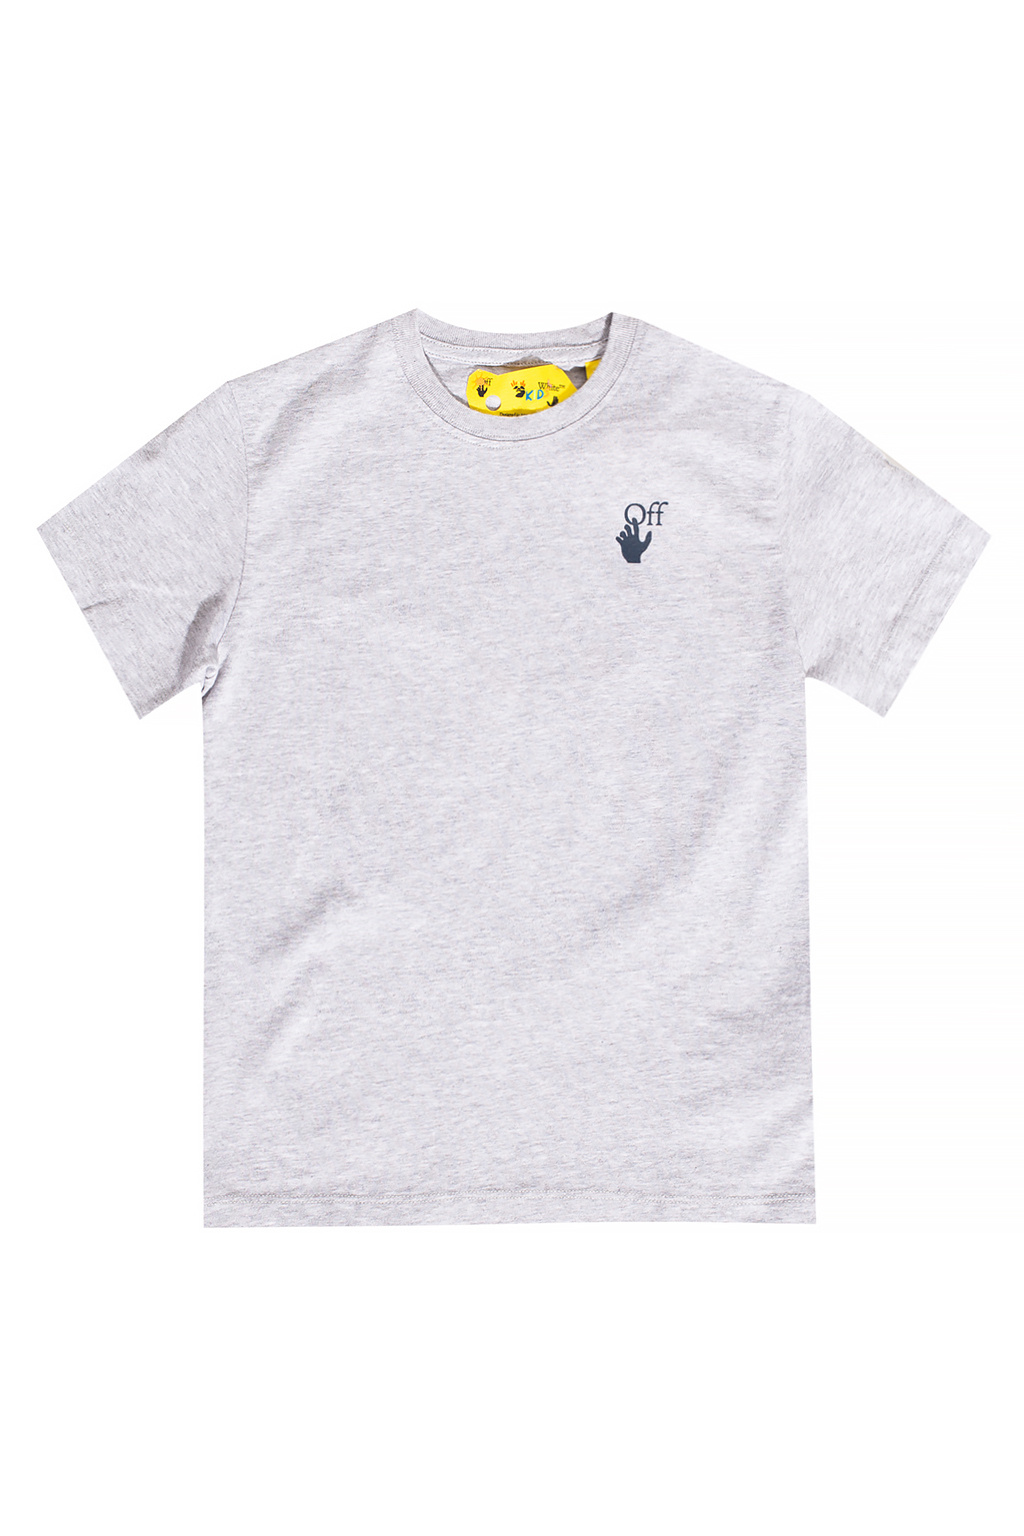 Off T-Shirt - Kurzarm Scott logo - Sweden Icon - White shirt - Grey T Kids with IetpShops